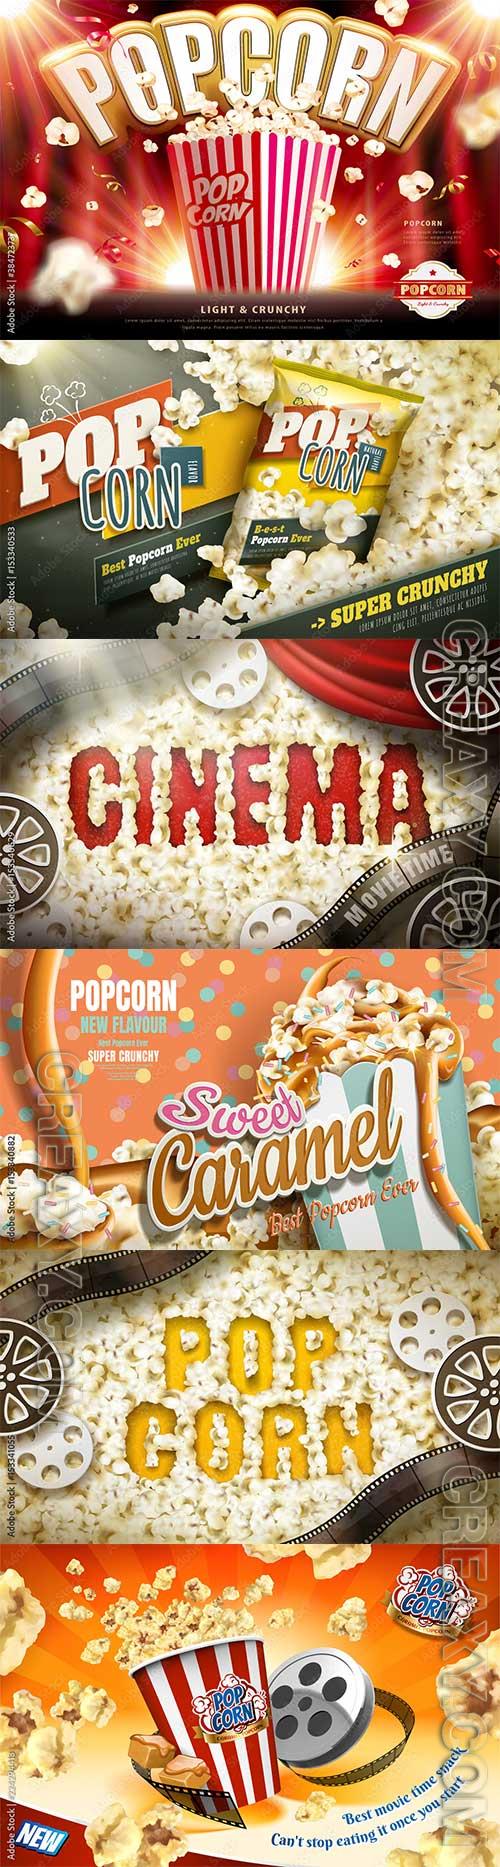 Delicious popcorn ads vector design